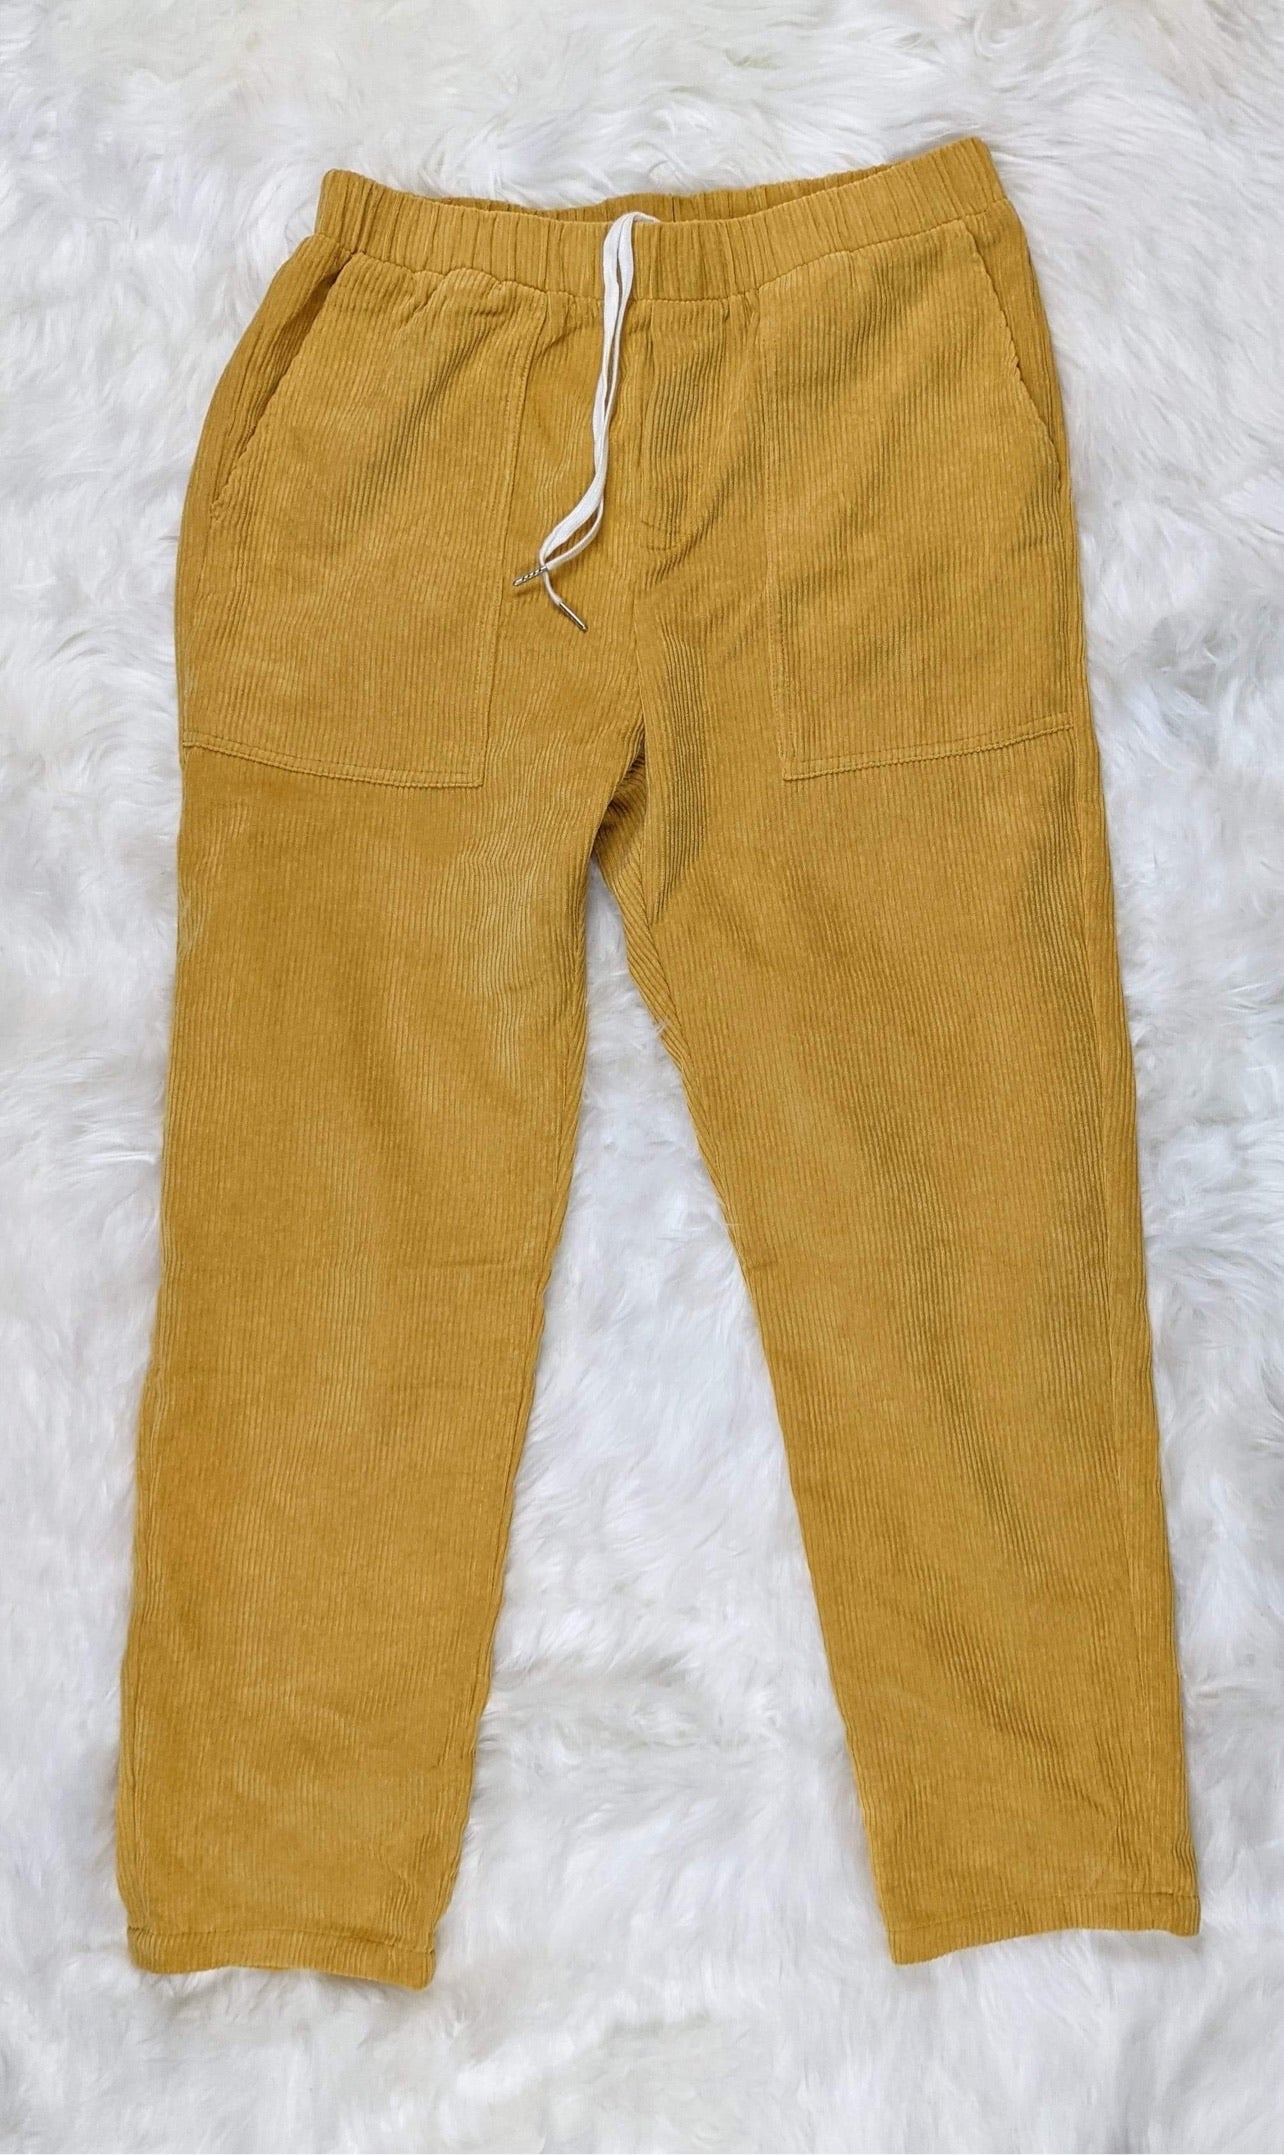 The Mellow Yellow Pants